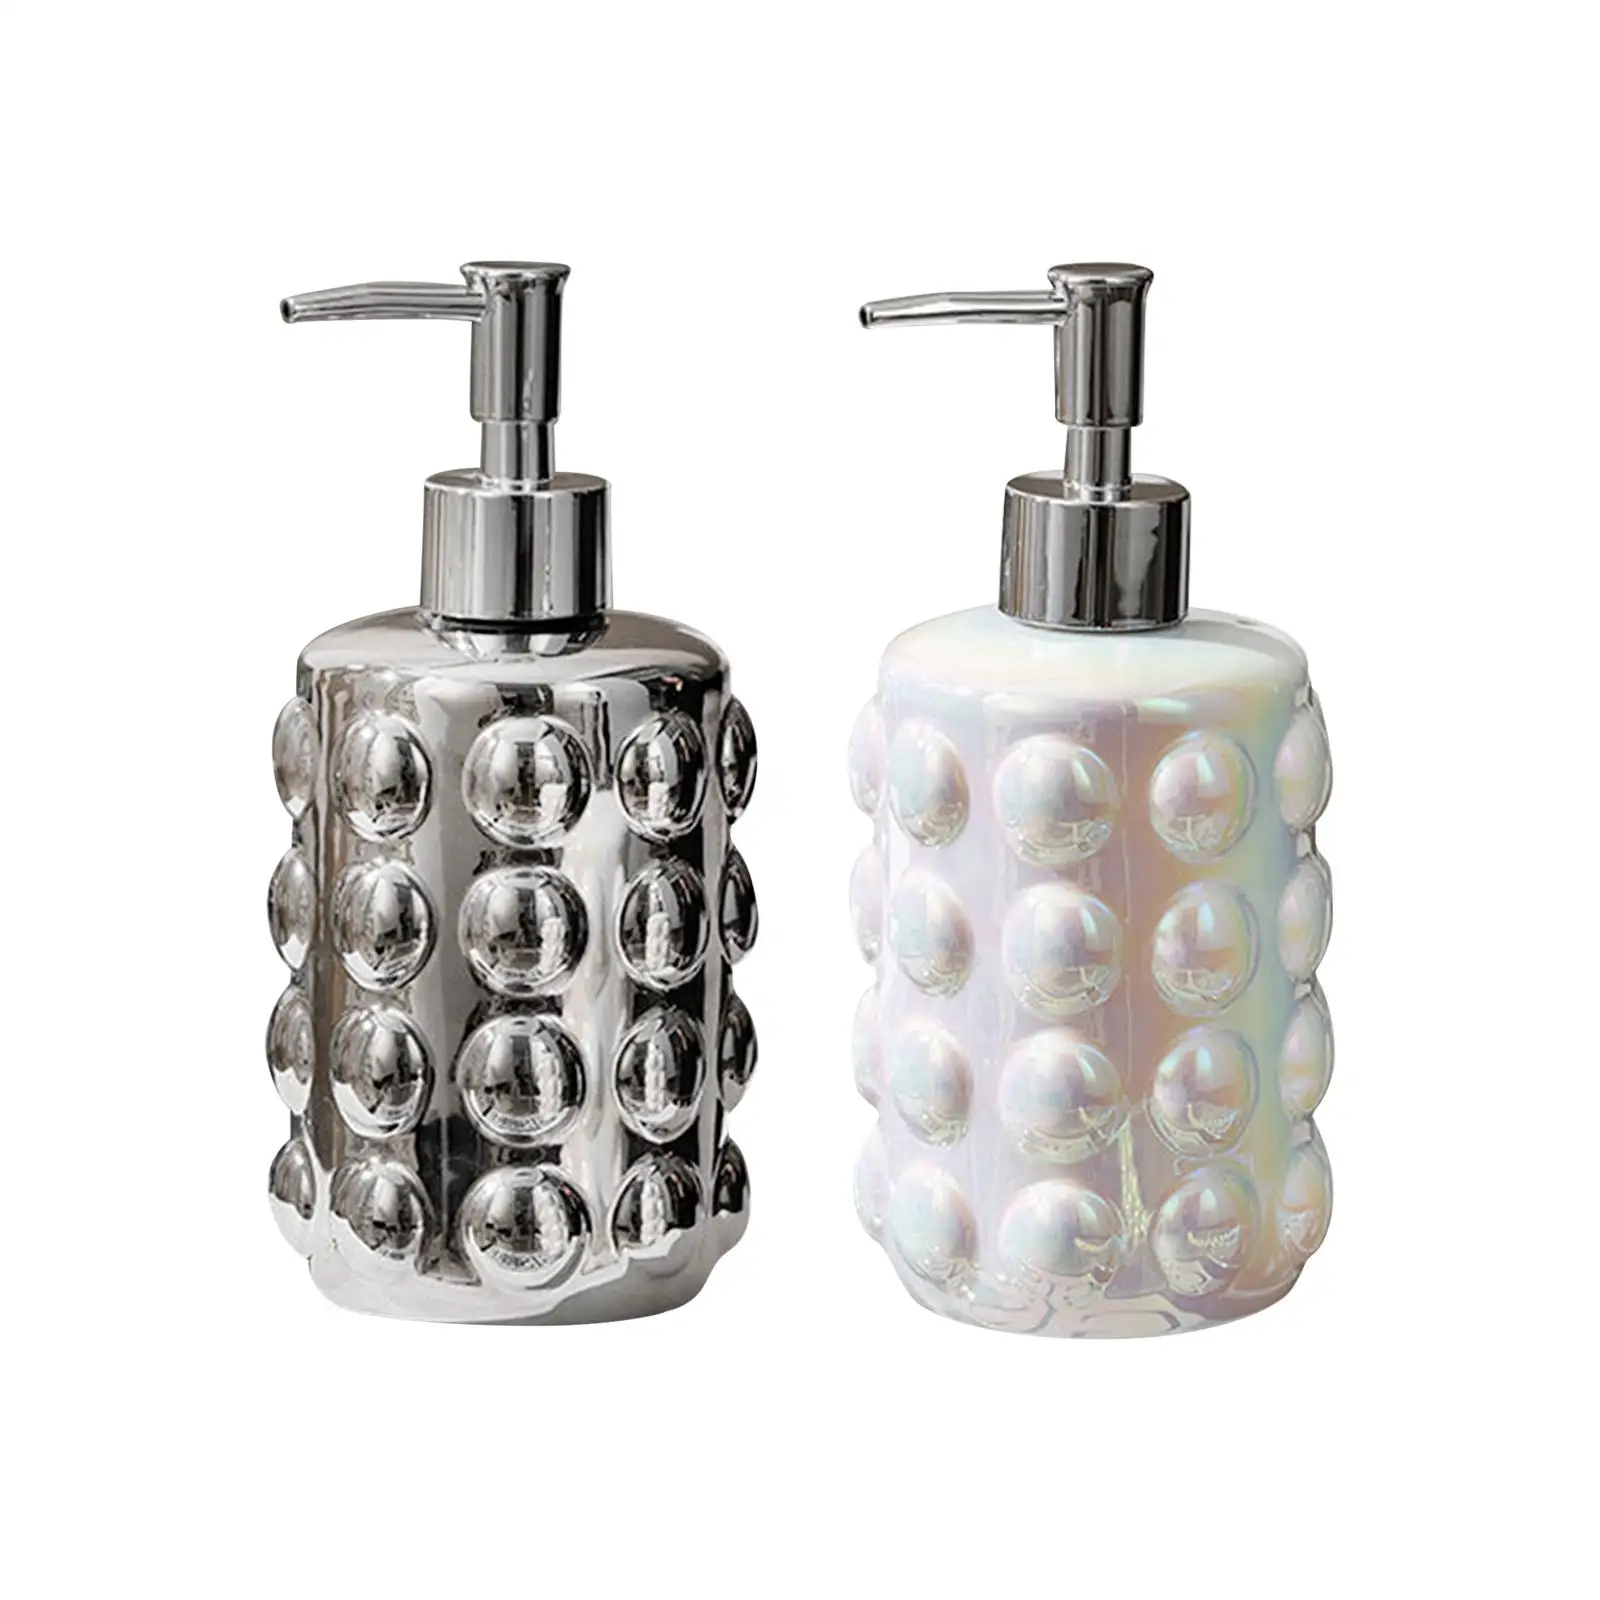 Ceramic Liquid Hand Soap Dispenser 350ml Countertop Soap Dispenser for Bathroom Washroom Size 8cmx12cm Elegant Bubble Appearance